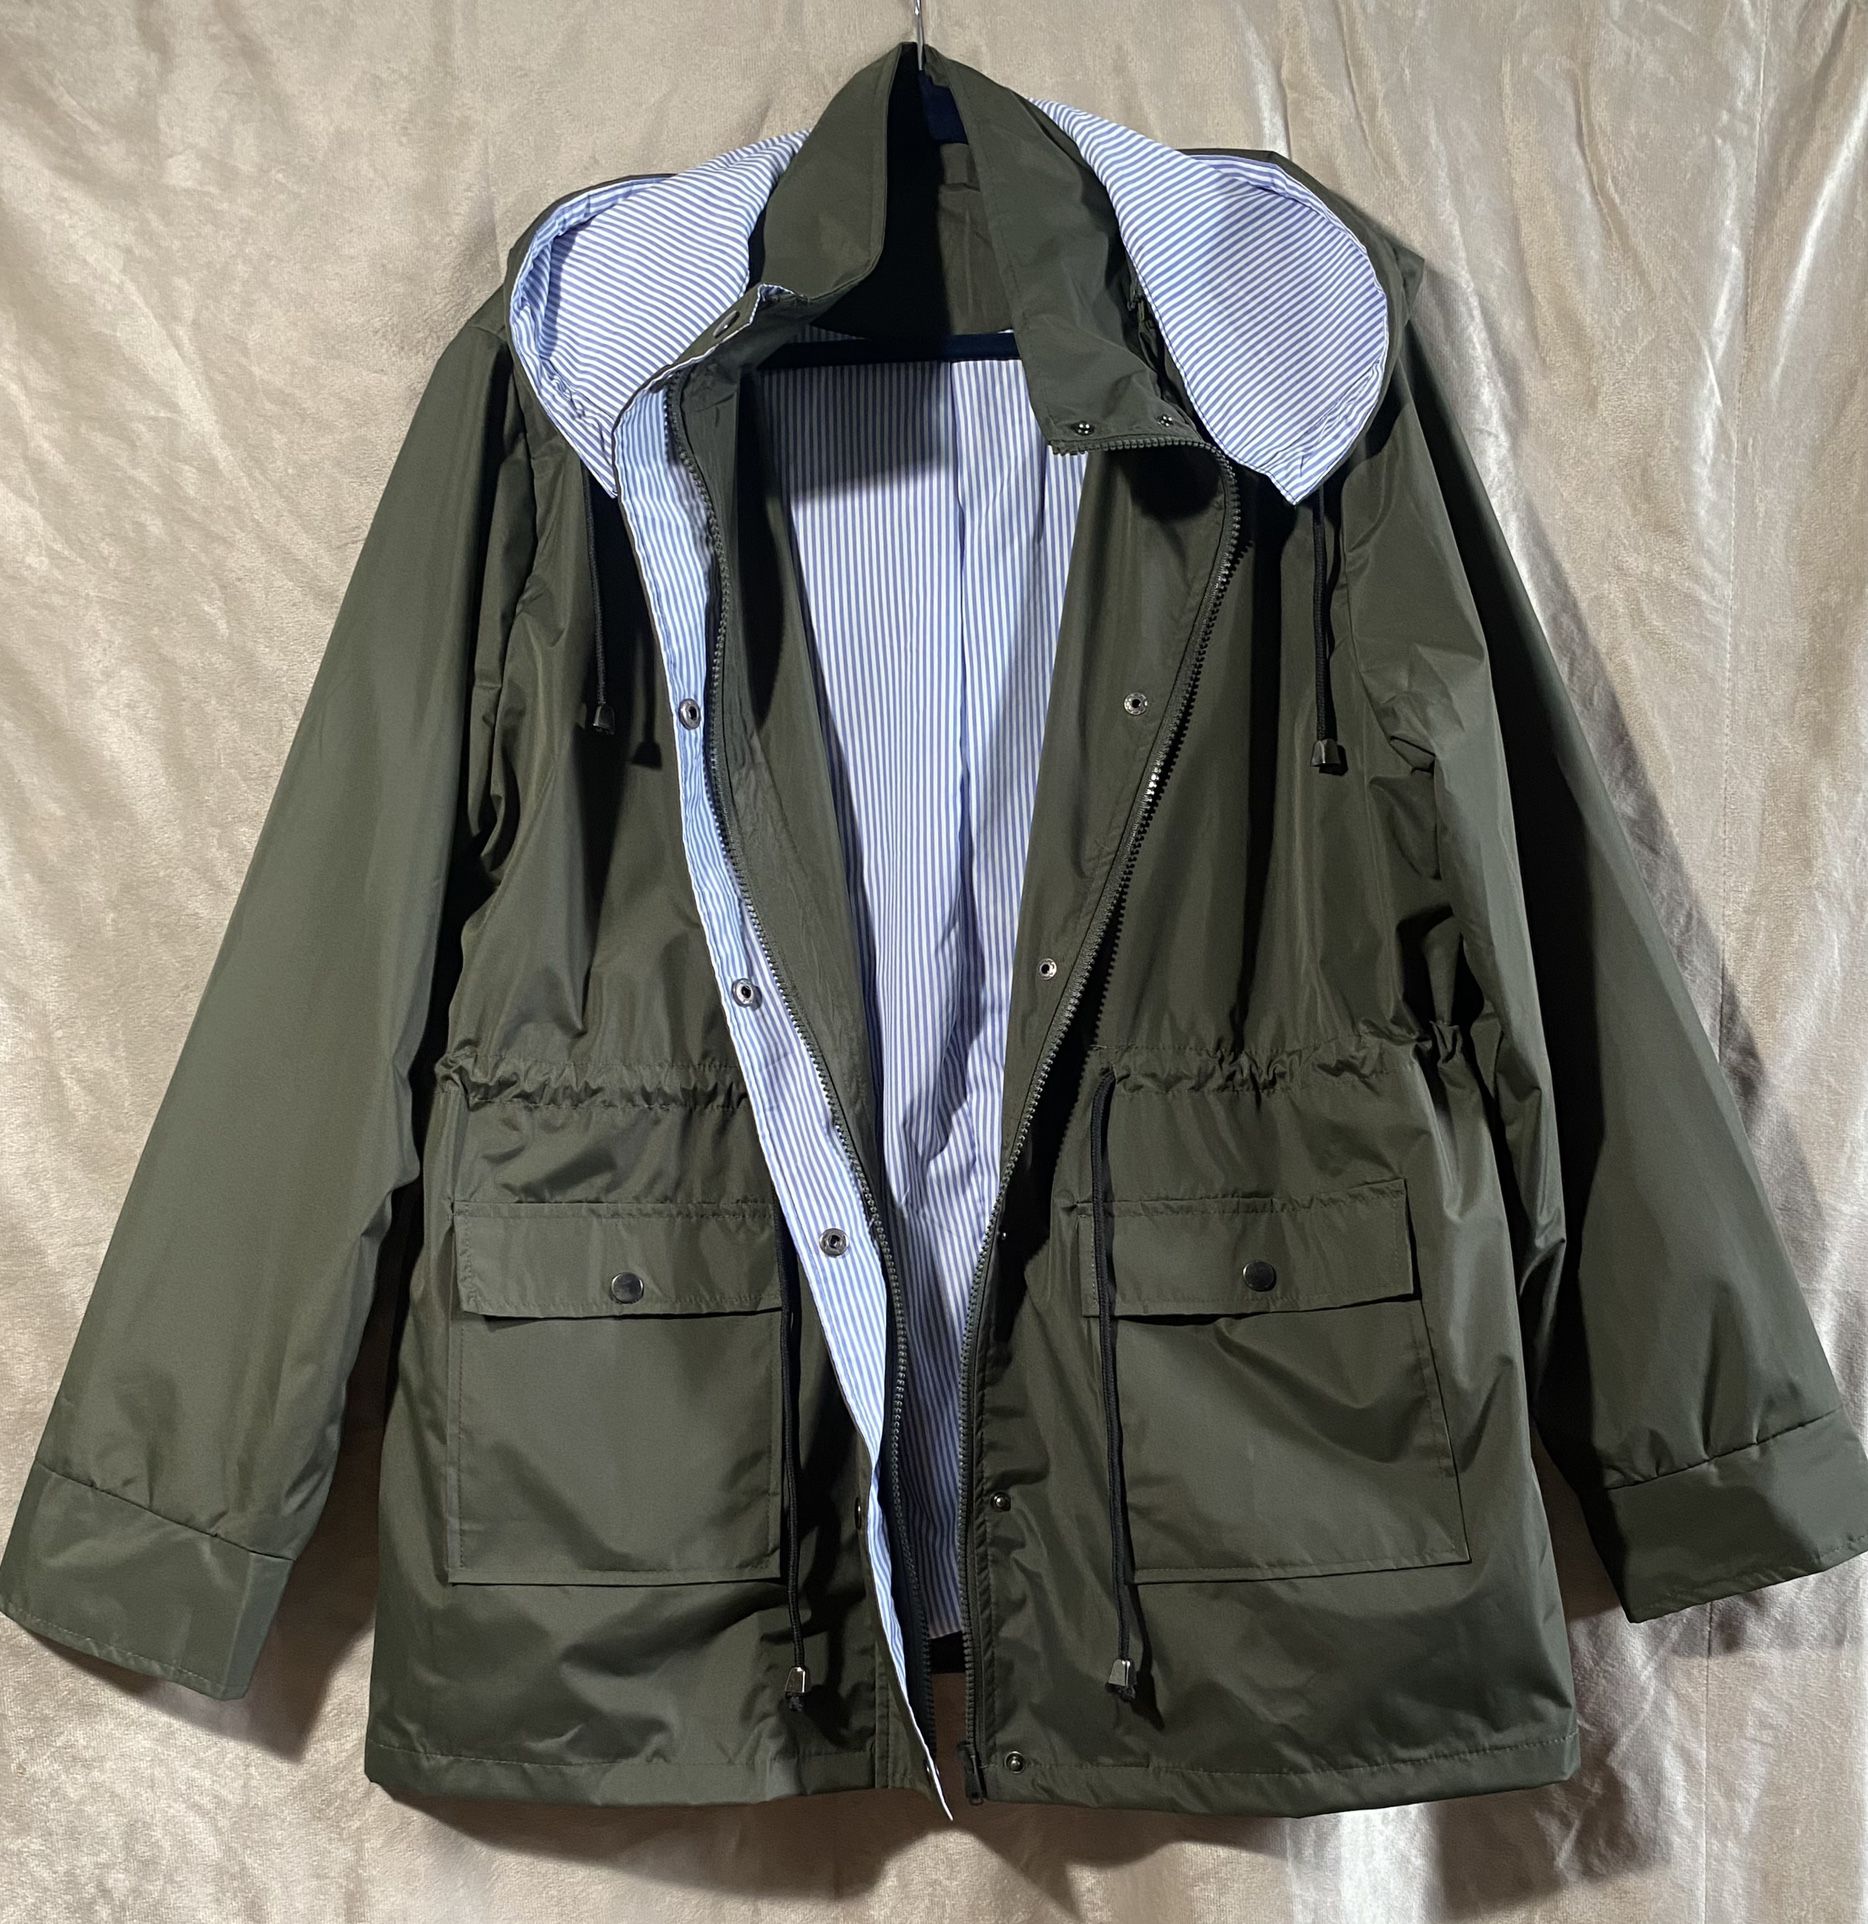 Rain Jackets For Women Waterproof Coats Hood Lightweight Windbreaker Outdoor